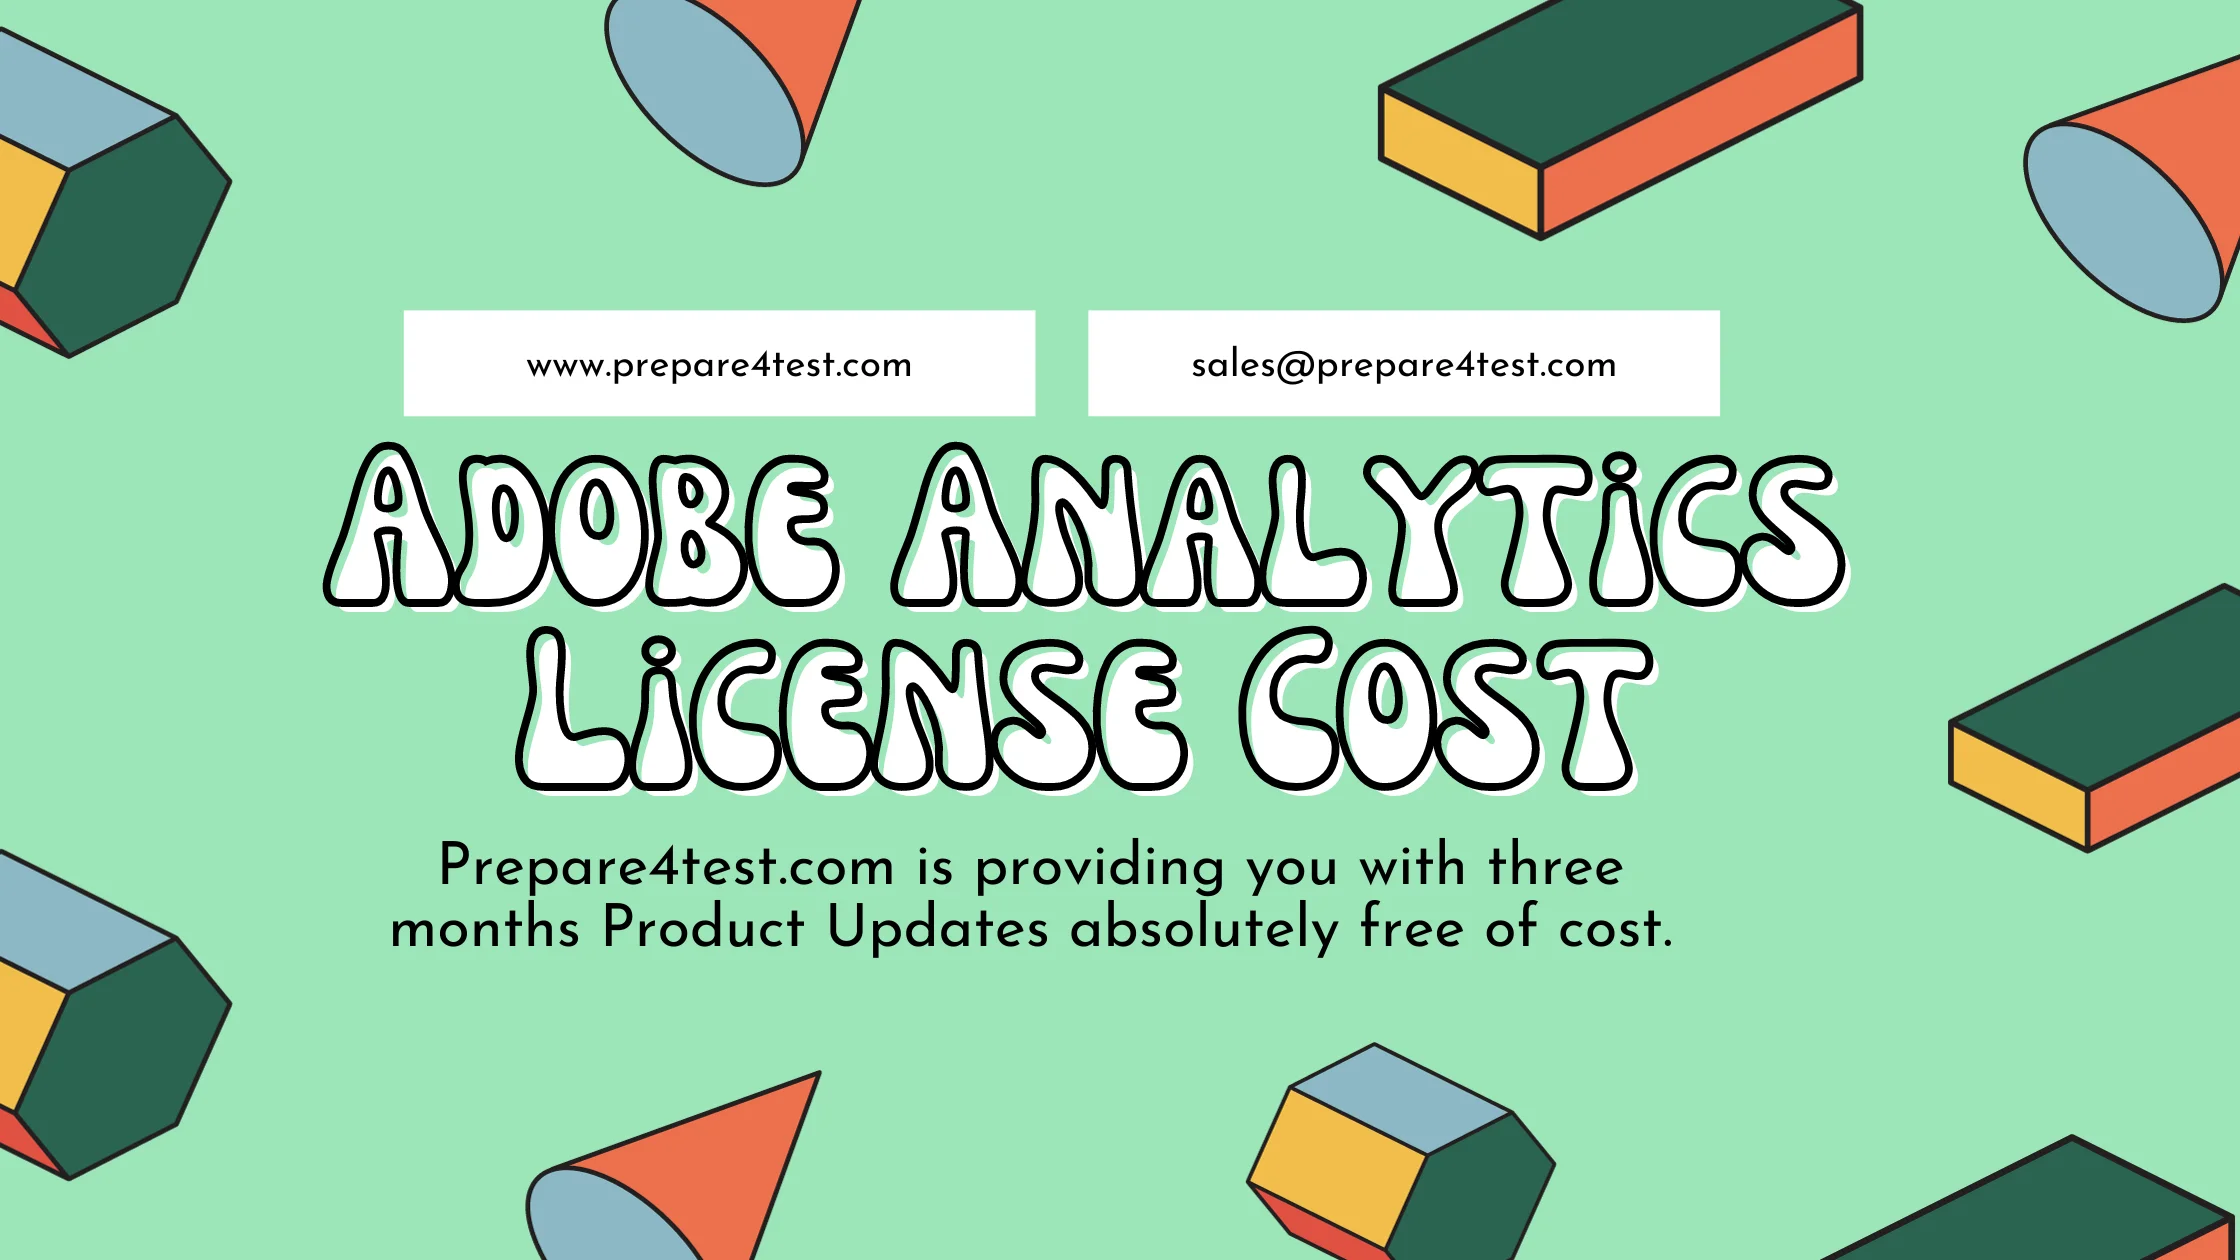 Adobe Analytics License Cost promotion